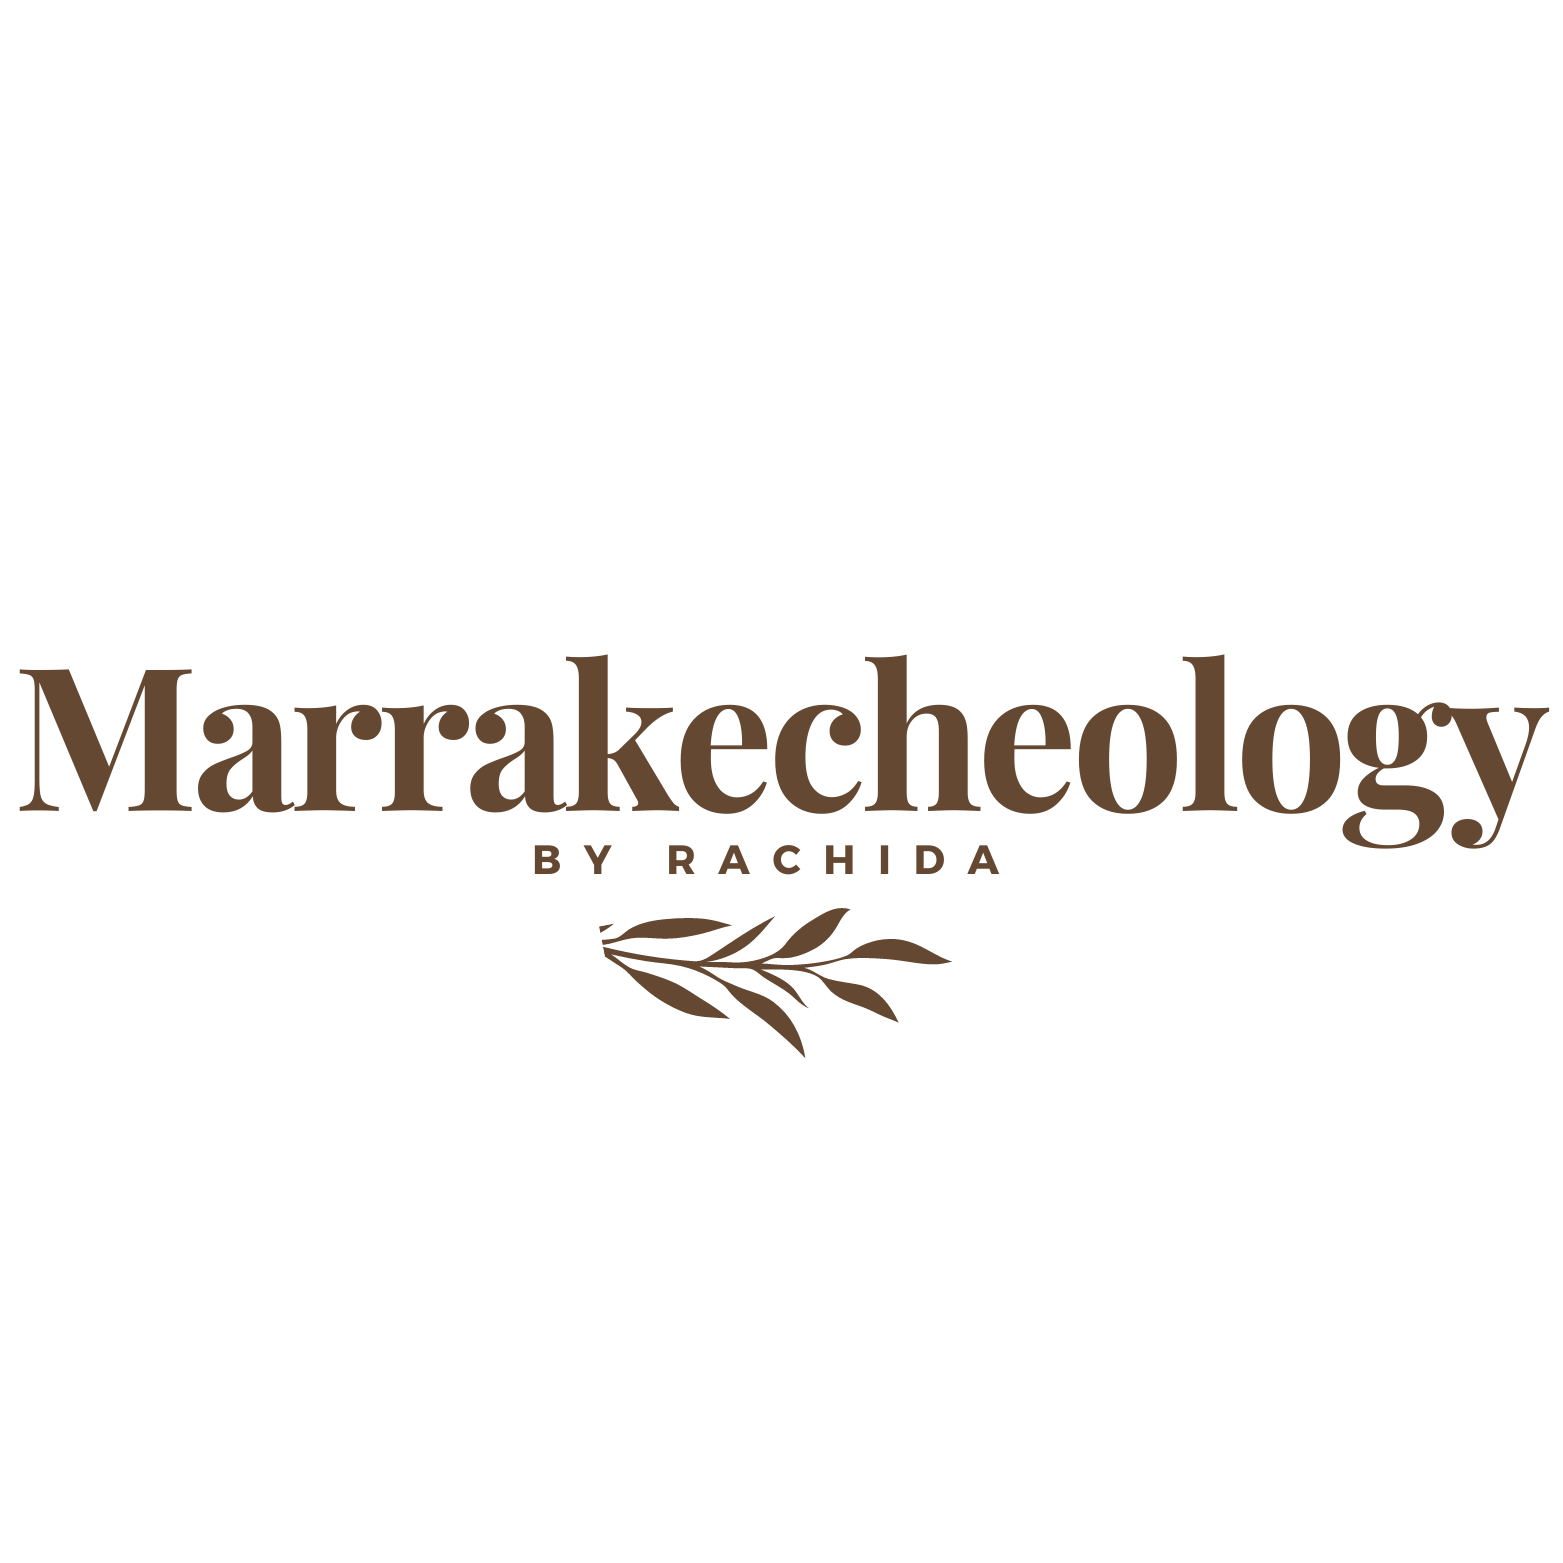 Marrakecheology